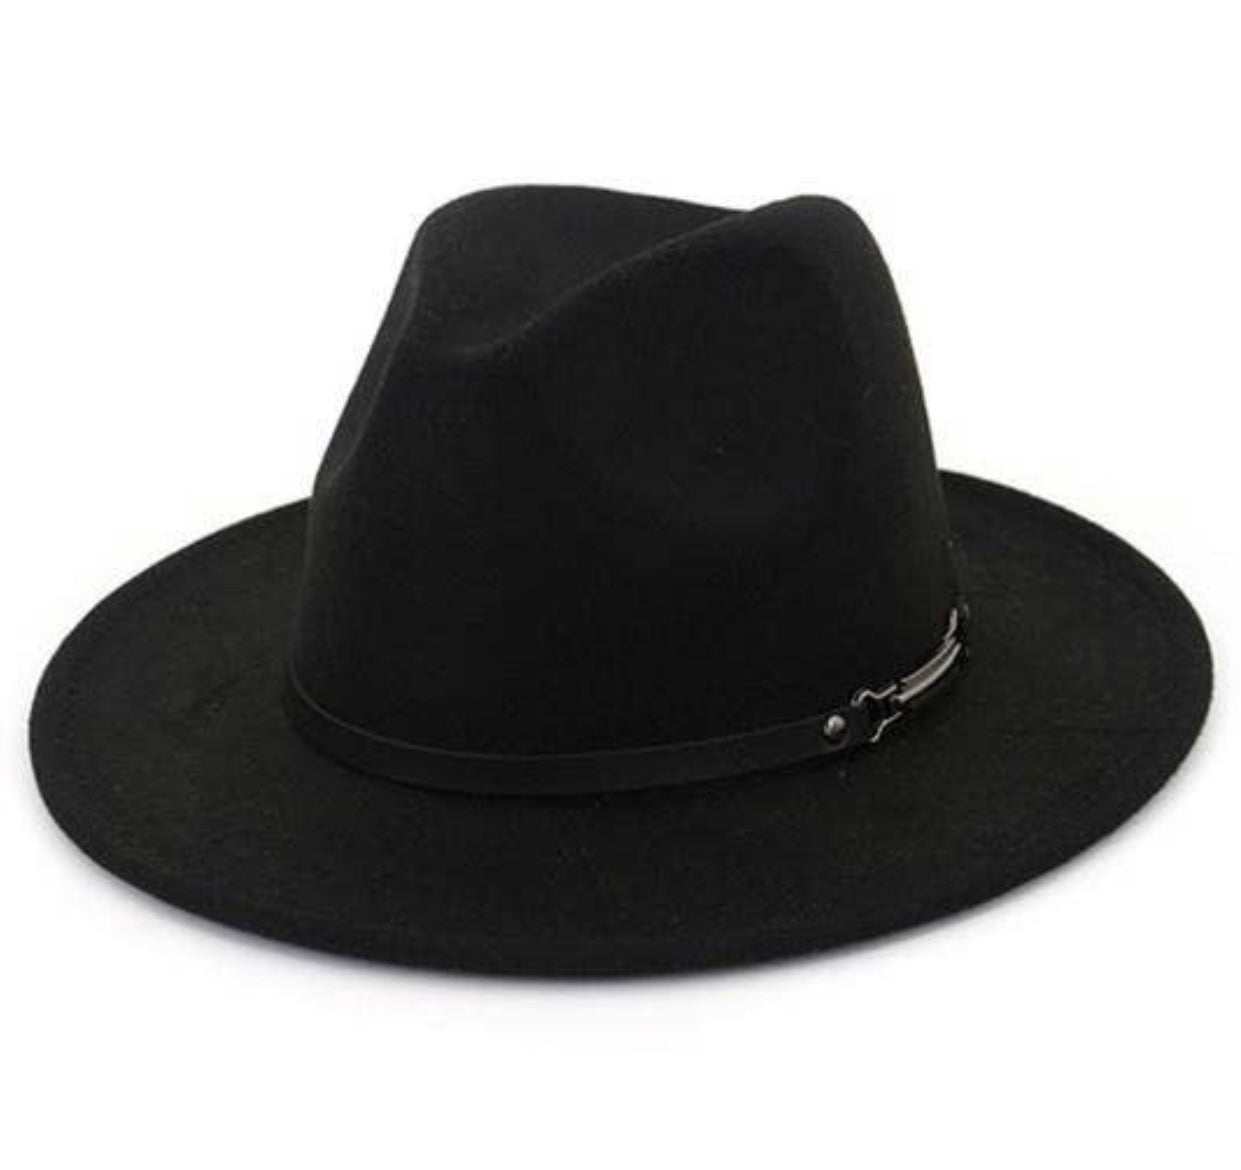 Retro Jazz hat with black band